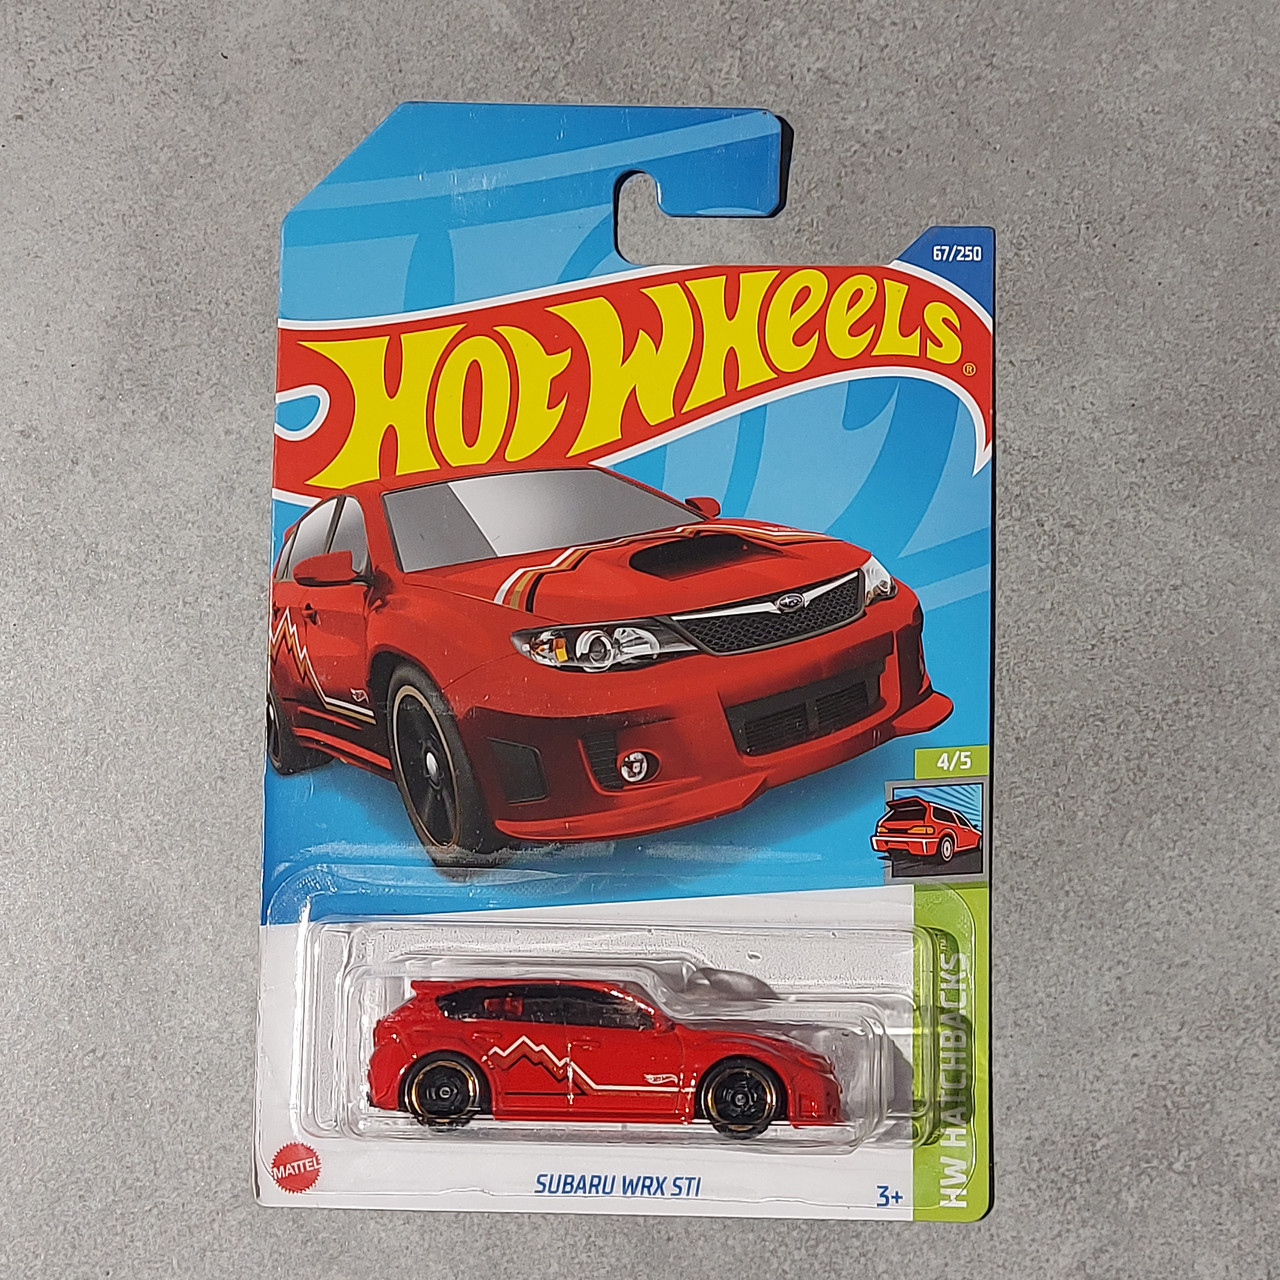 Оригинальная Машинка "Hot wheels" Subaru WRX STI. HW Hatchbacks. Mattel. 67/250. Хотвилс. Машинки. Подарок.